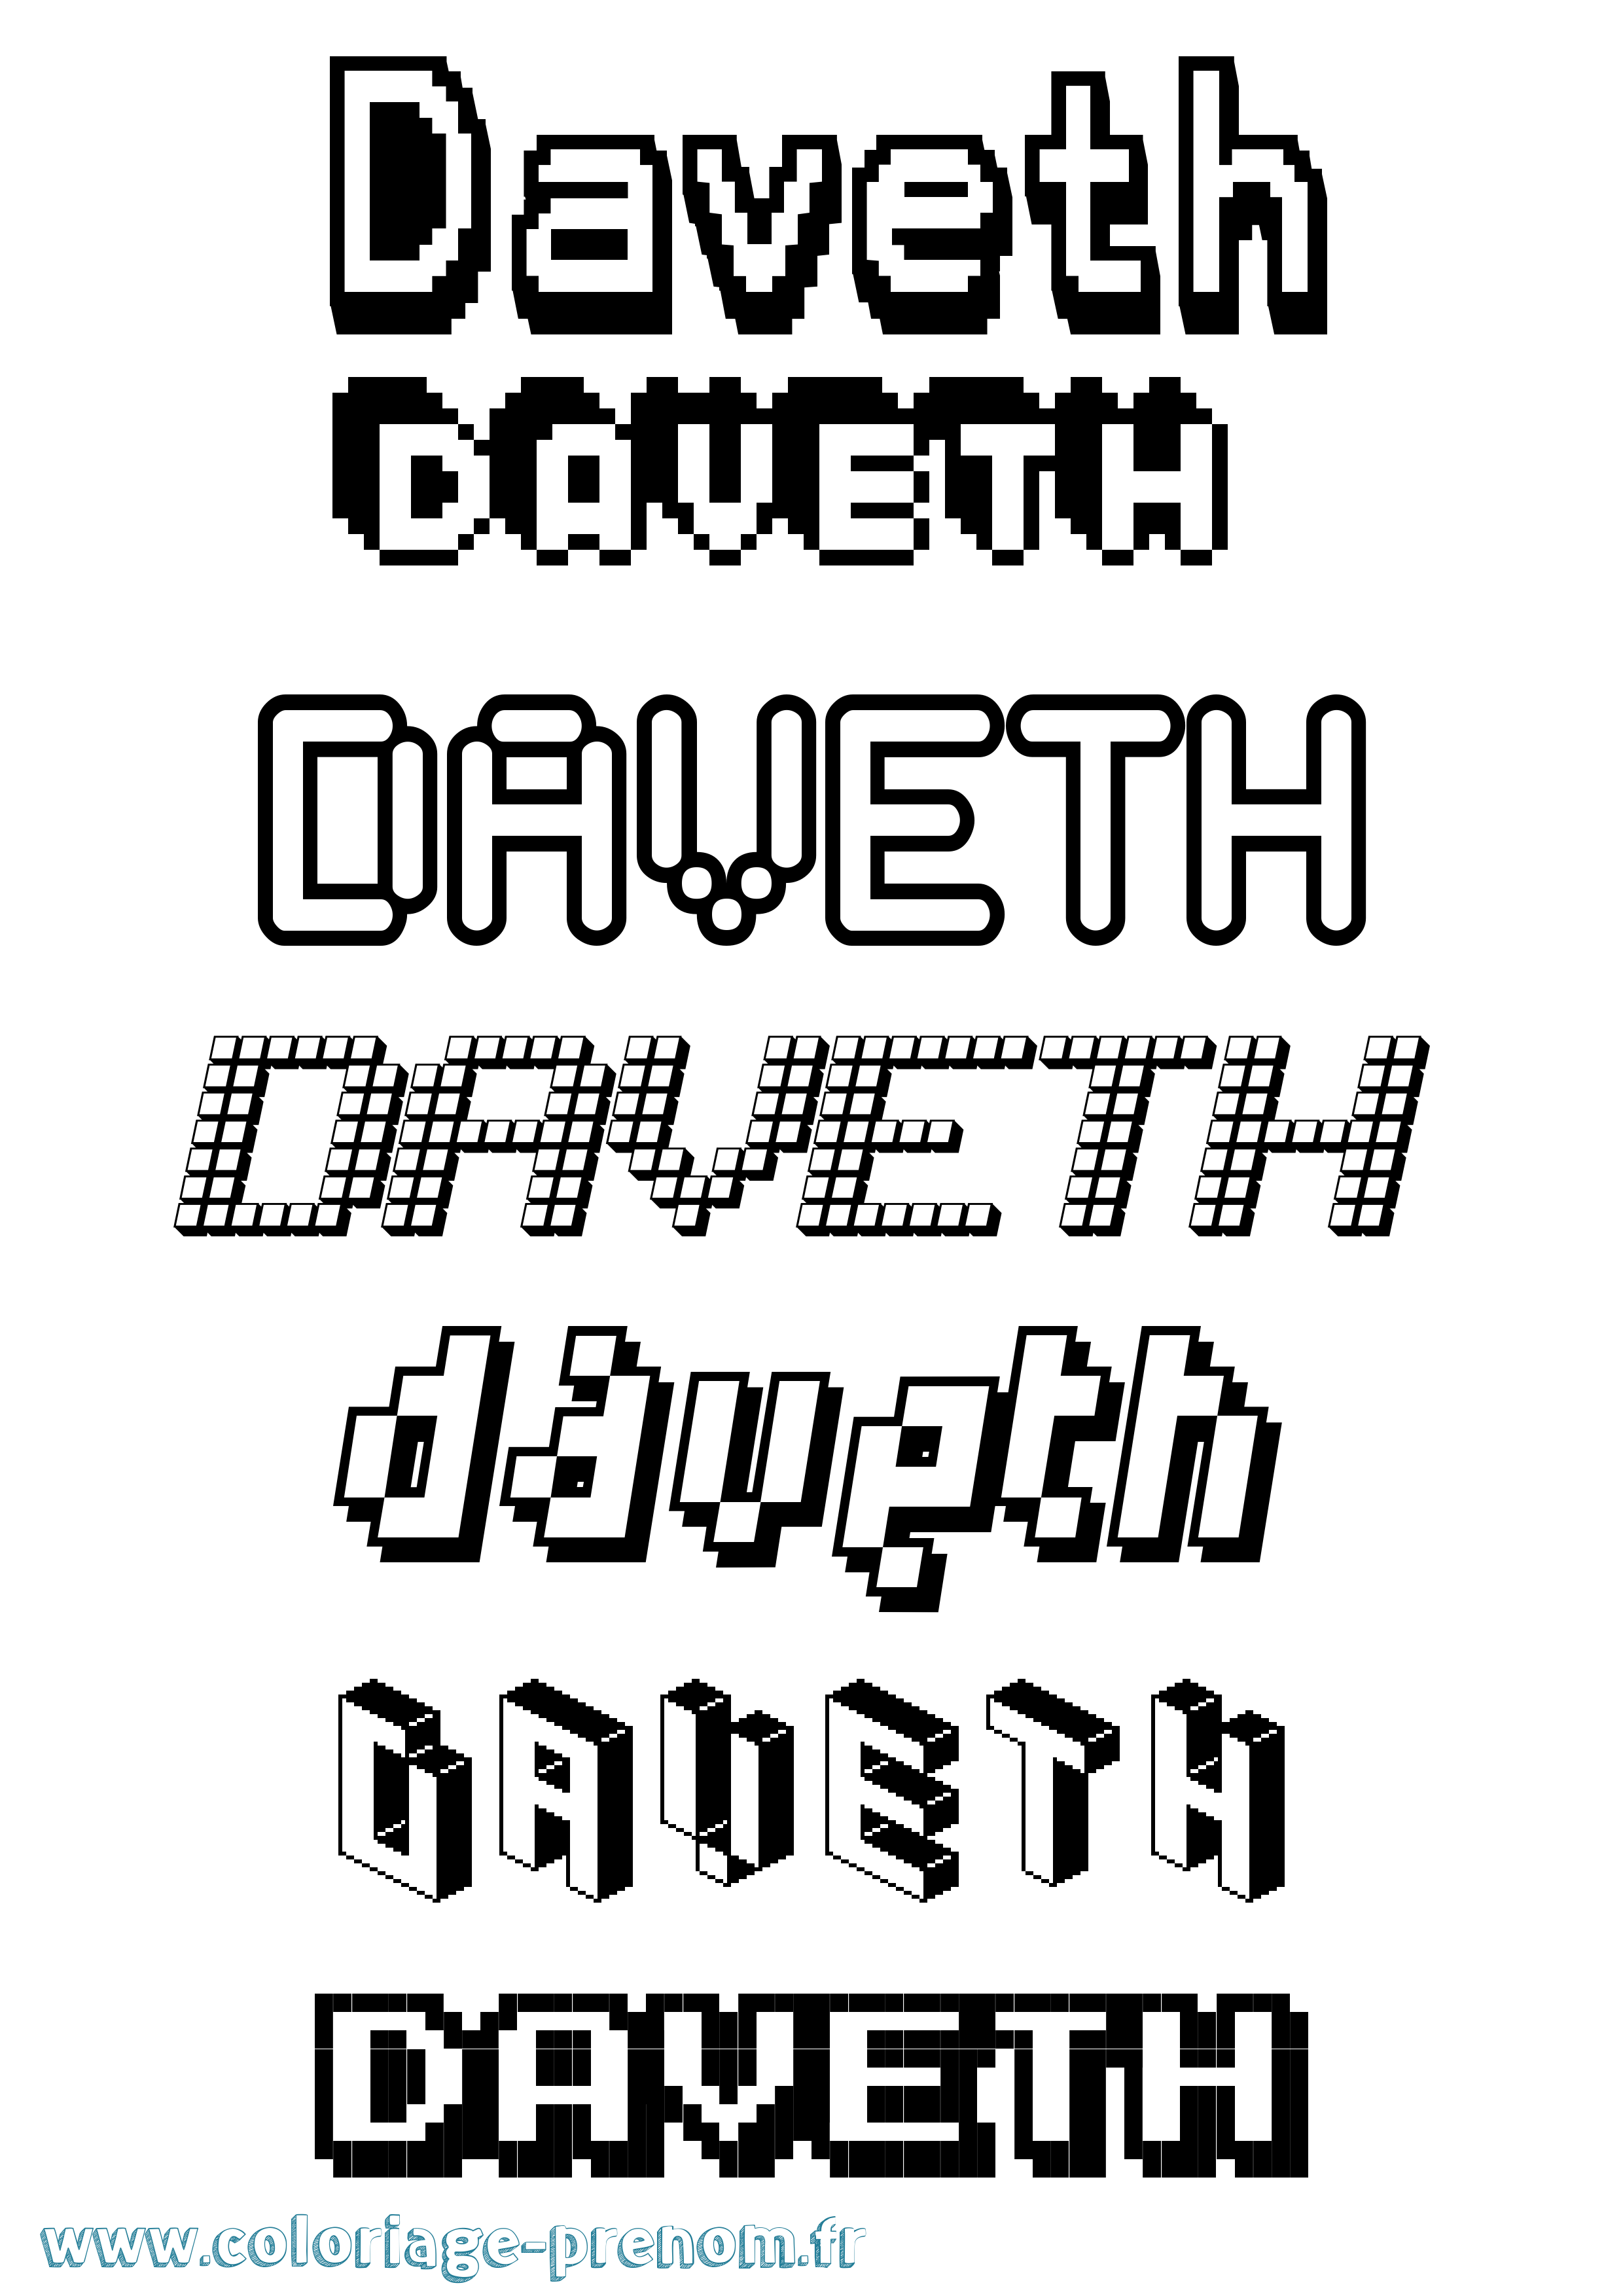 Coloriage prénom Daveth Pixel